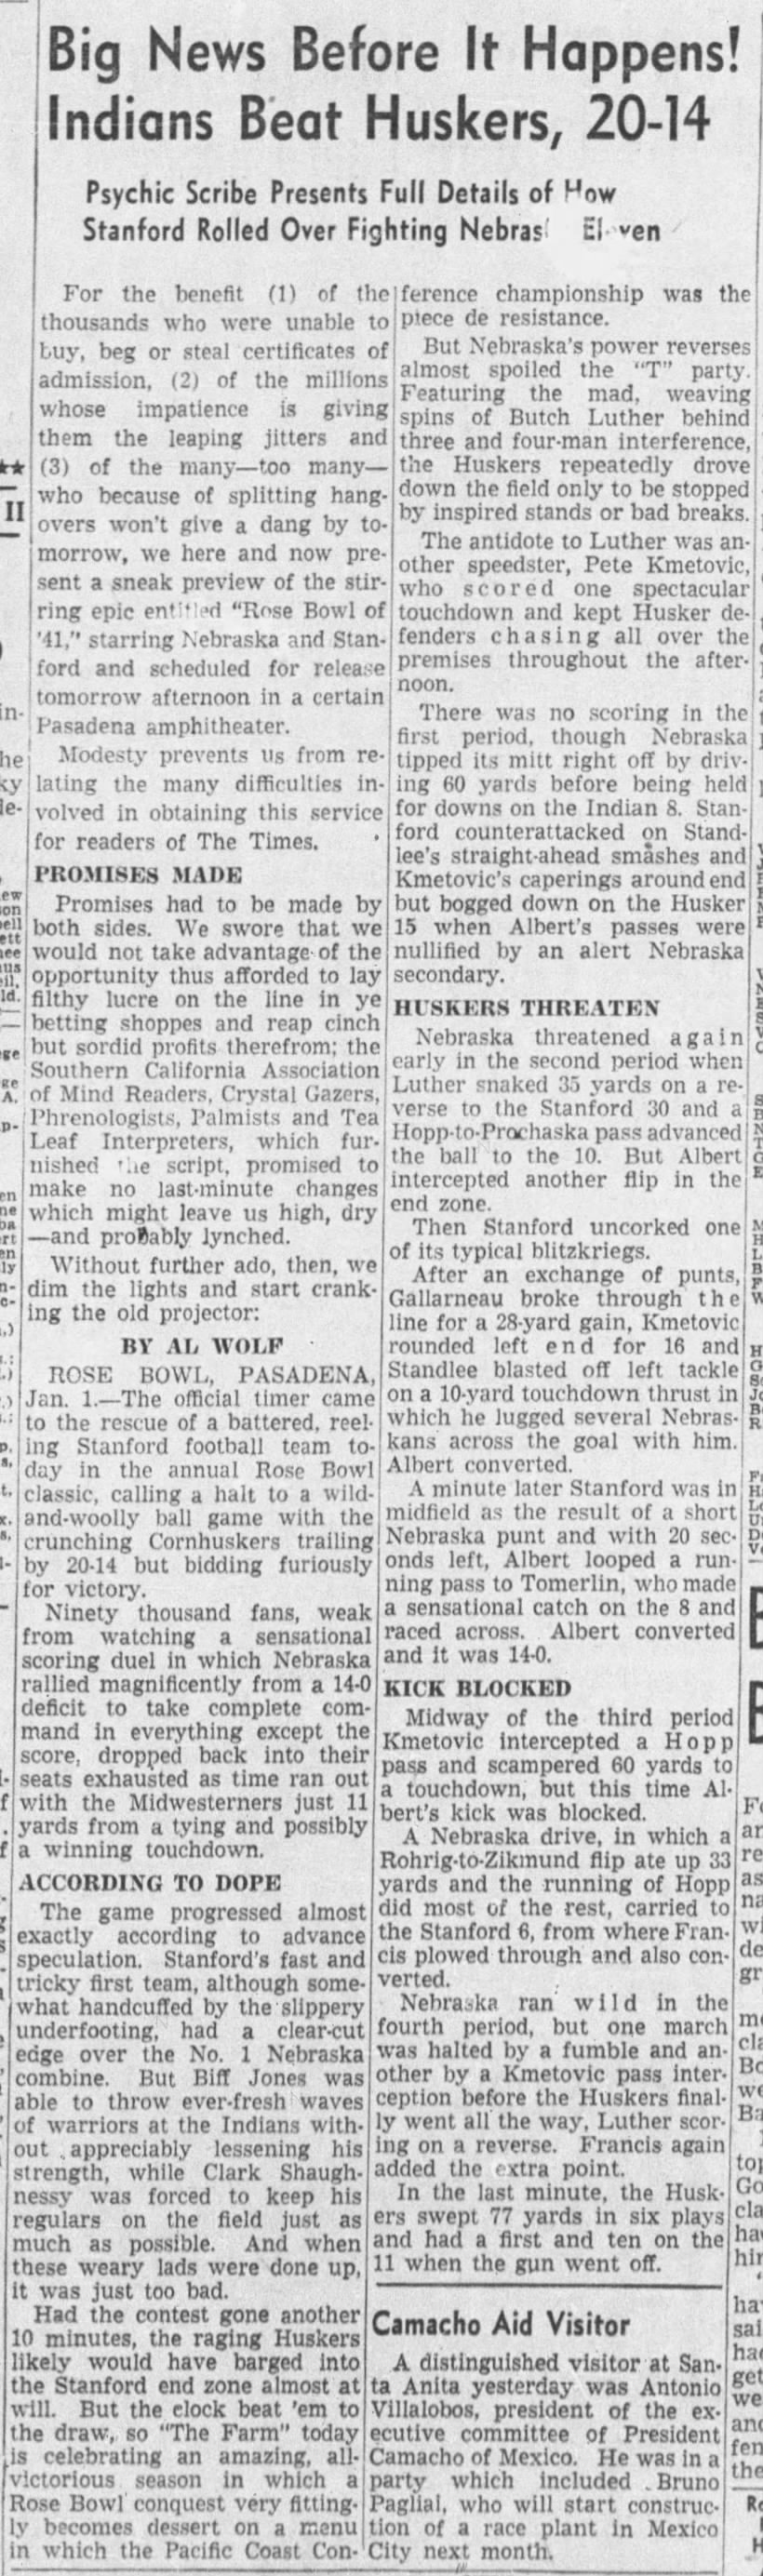 1941 Rose Bowl, Al Wolf prediction